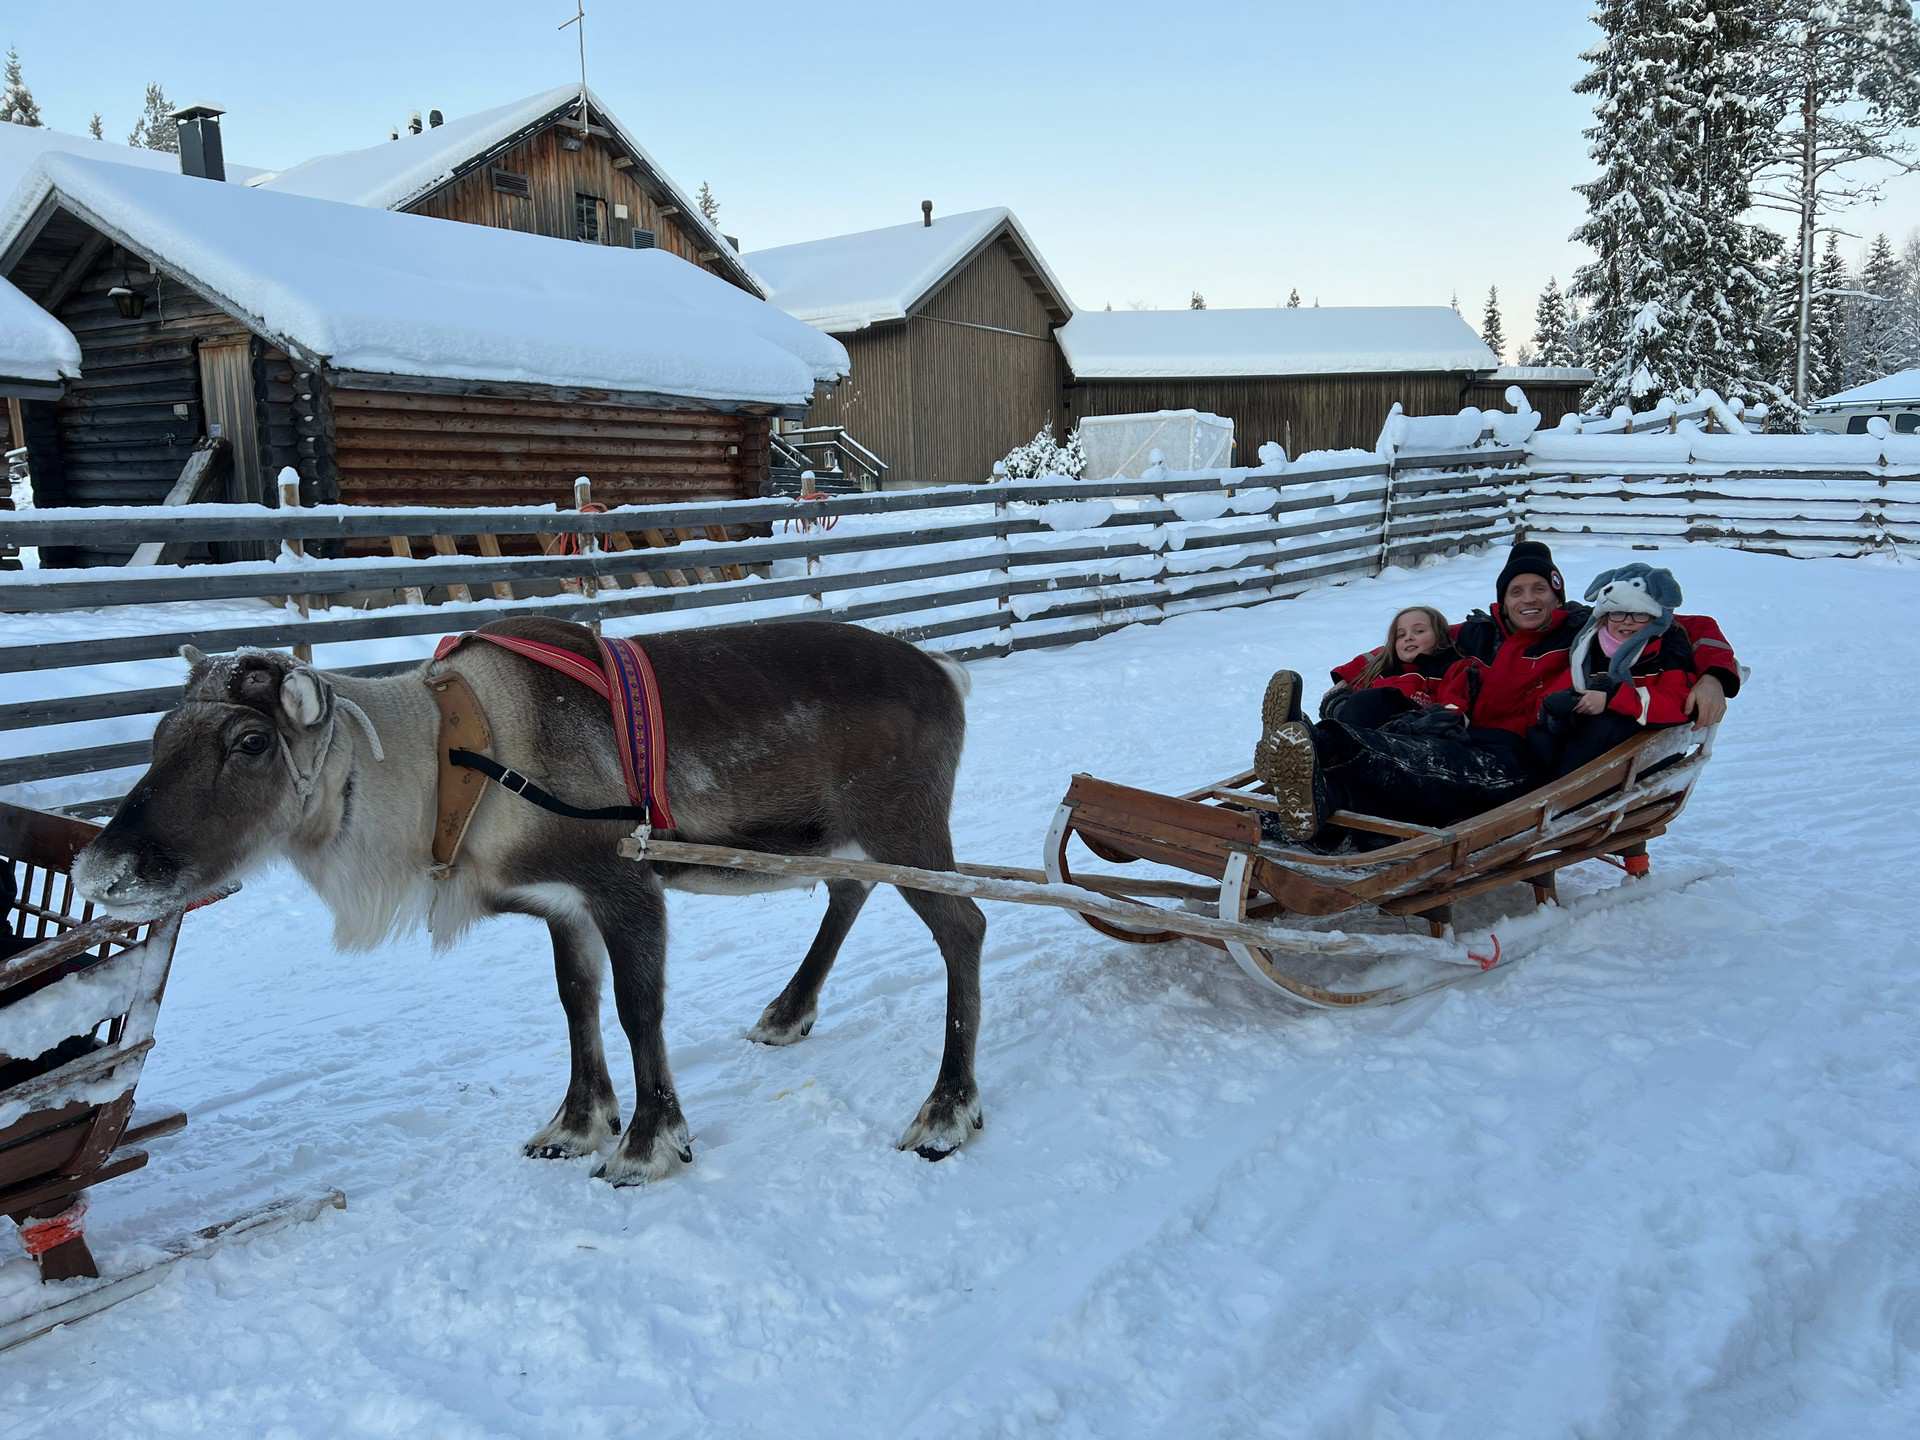 David Simpson and nieces riding sleigh in Saariselka, Finland. Arriving in Santa Claus Village